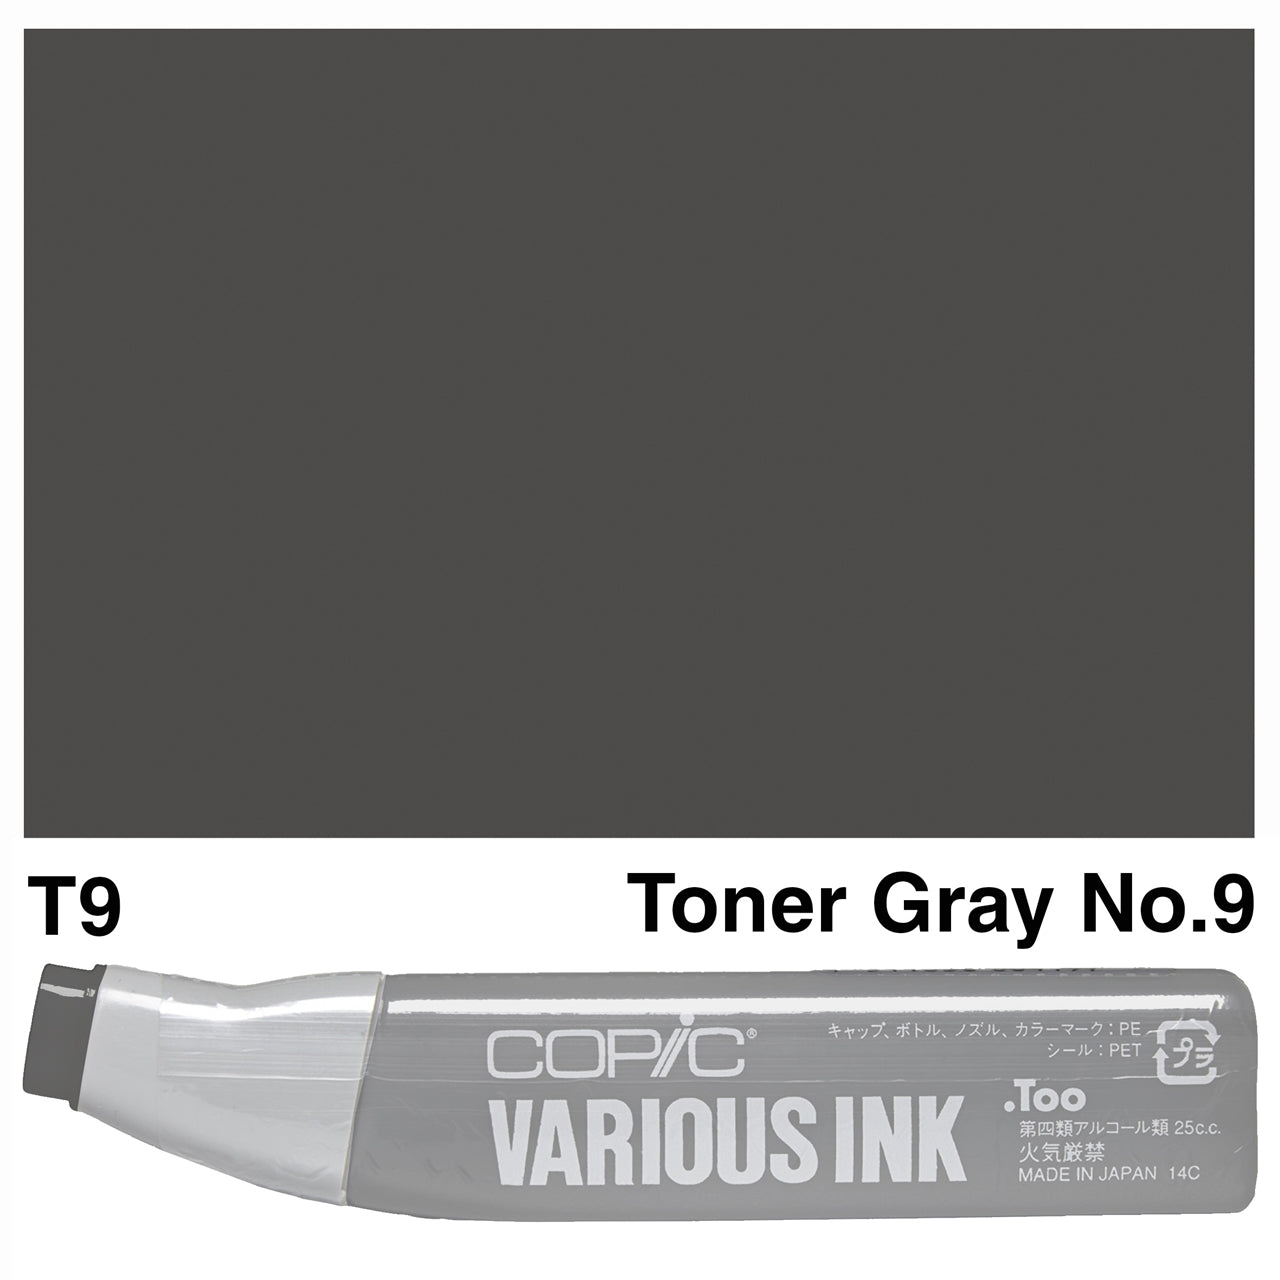 Copic Various Ink T9 Toner Gray No.9 - theartshop.com.au